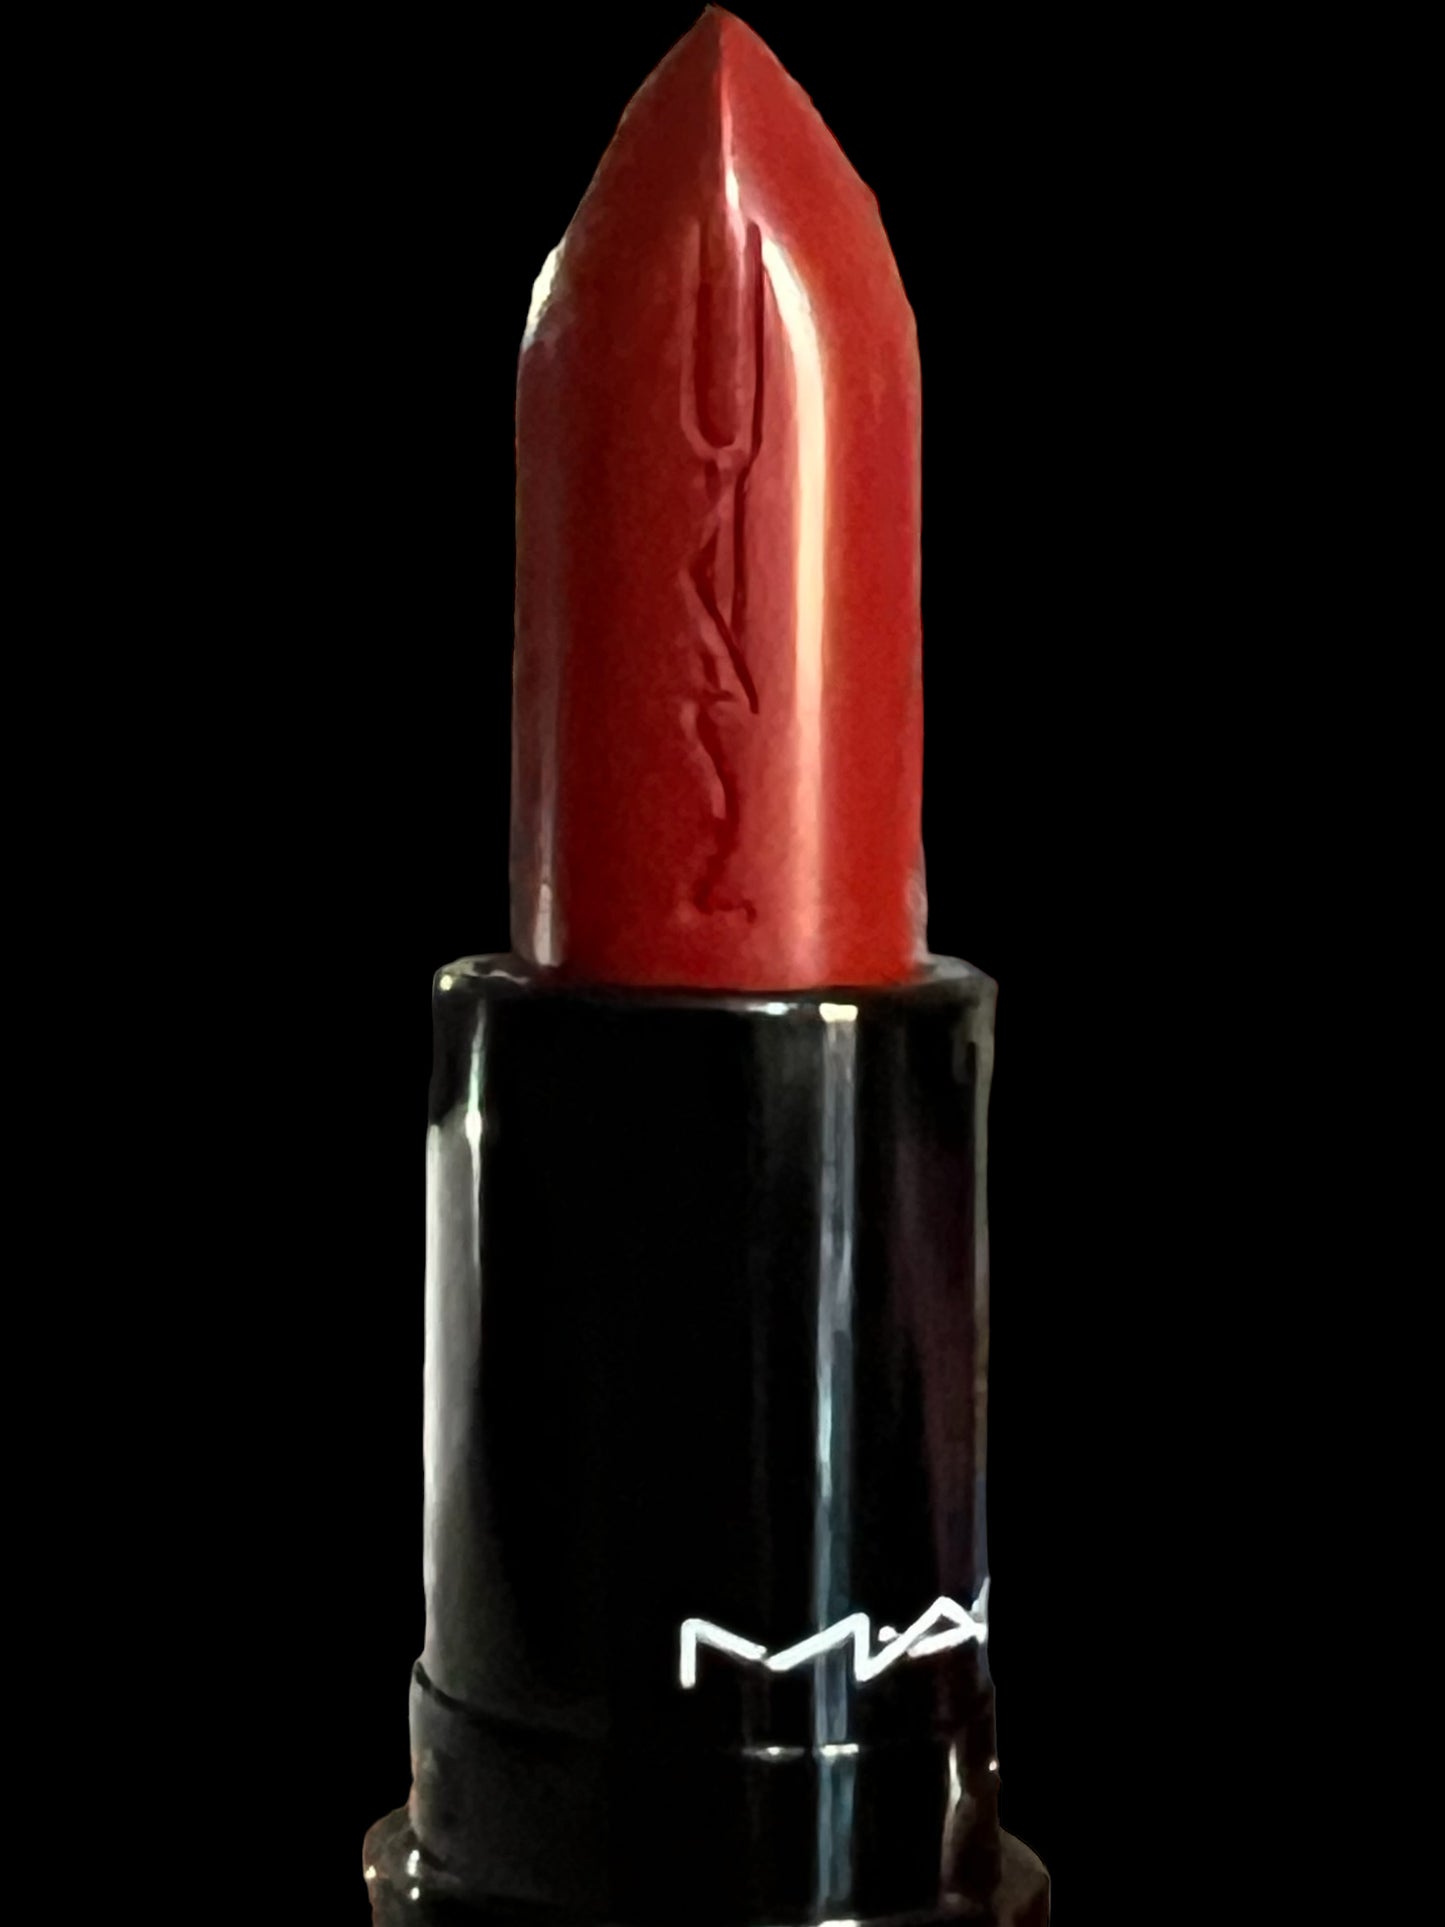 MAC Lustreglass Sheer Shine Lipstick